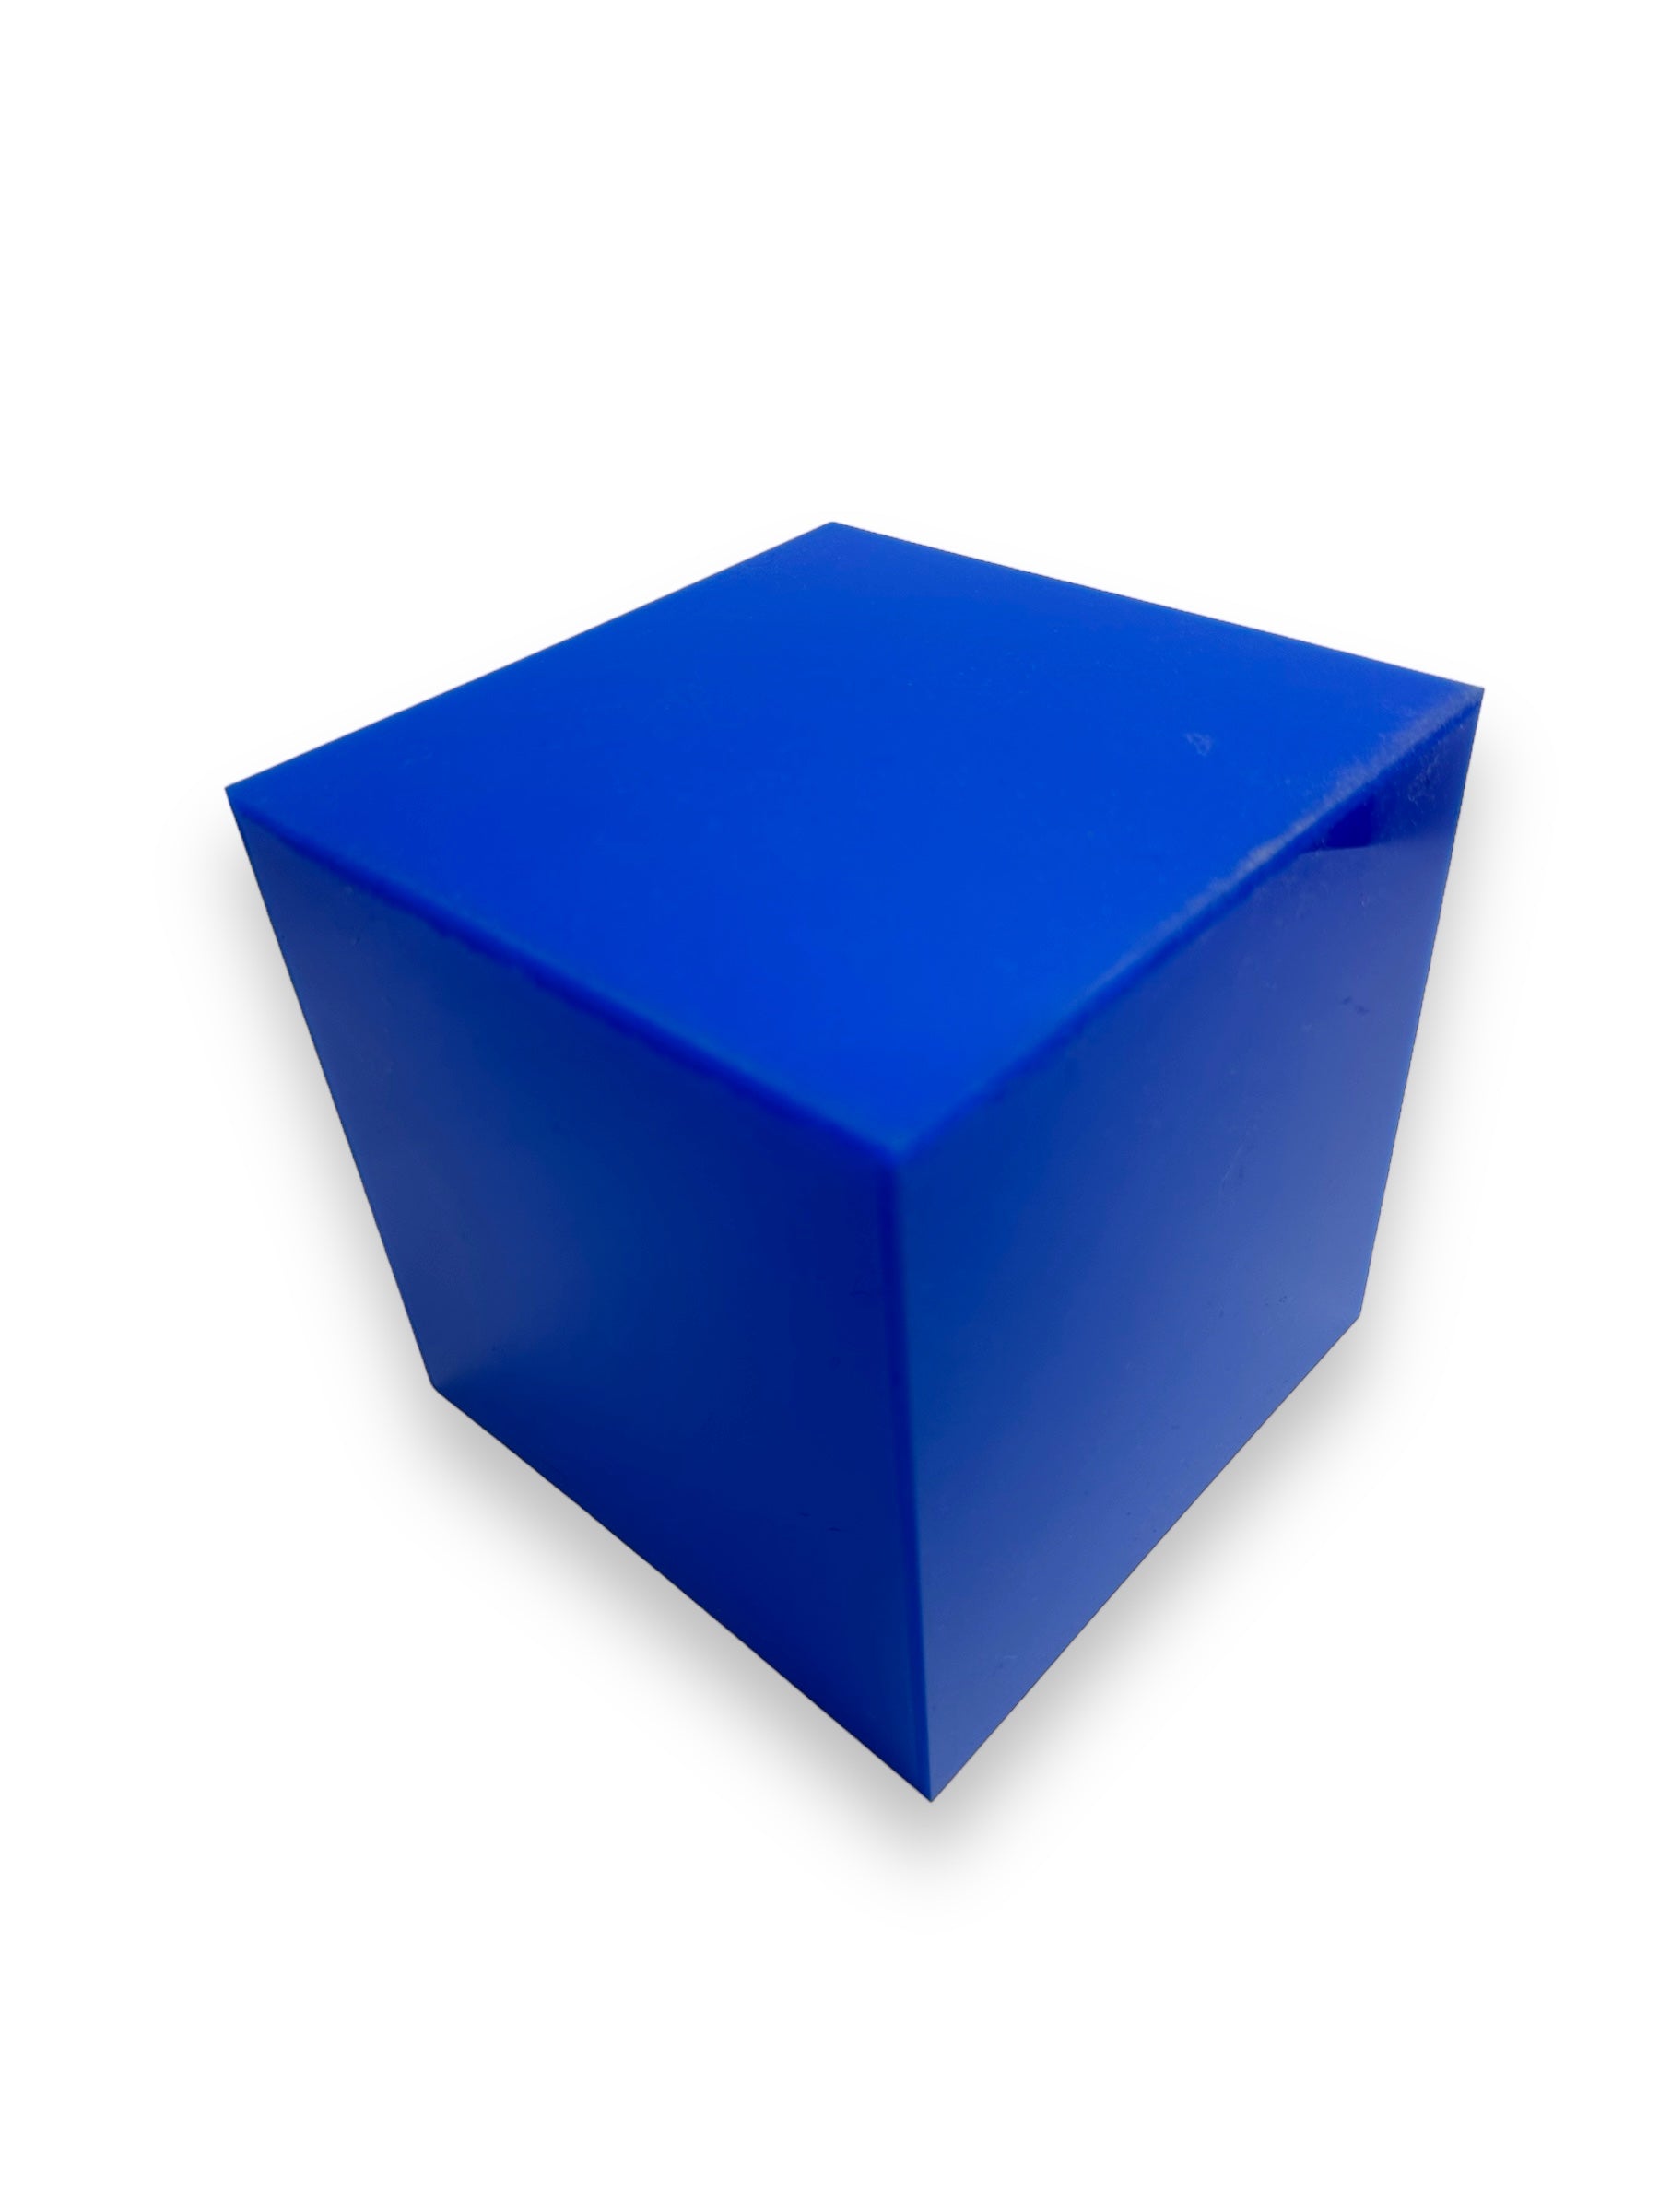 Blue custom made 5 sided acrylic box